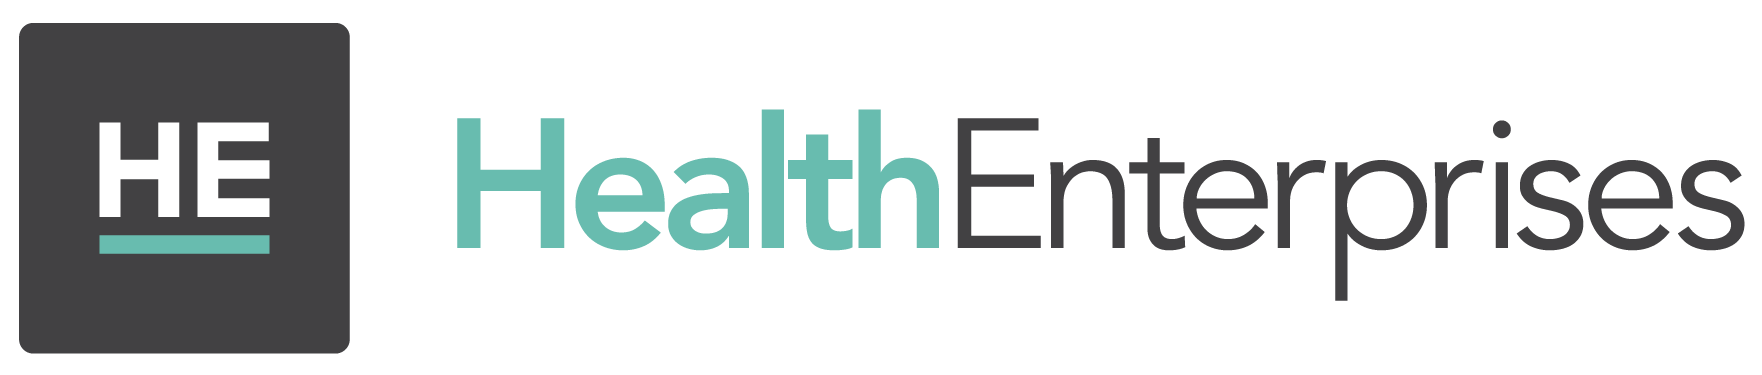 Health Enterprises